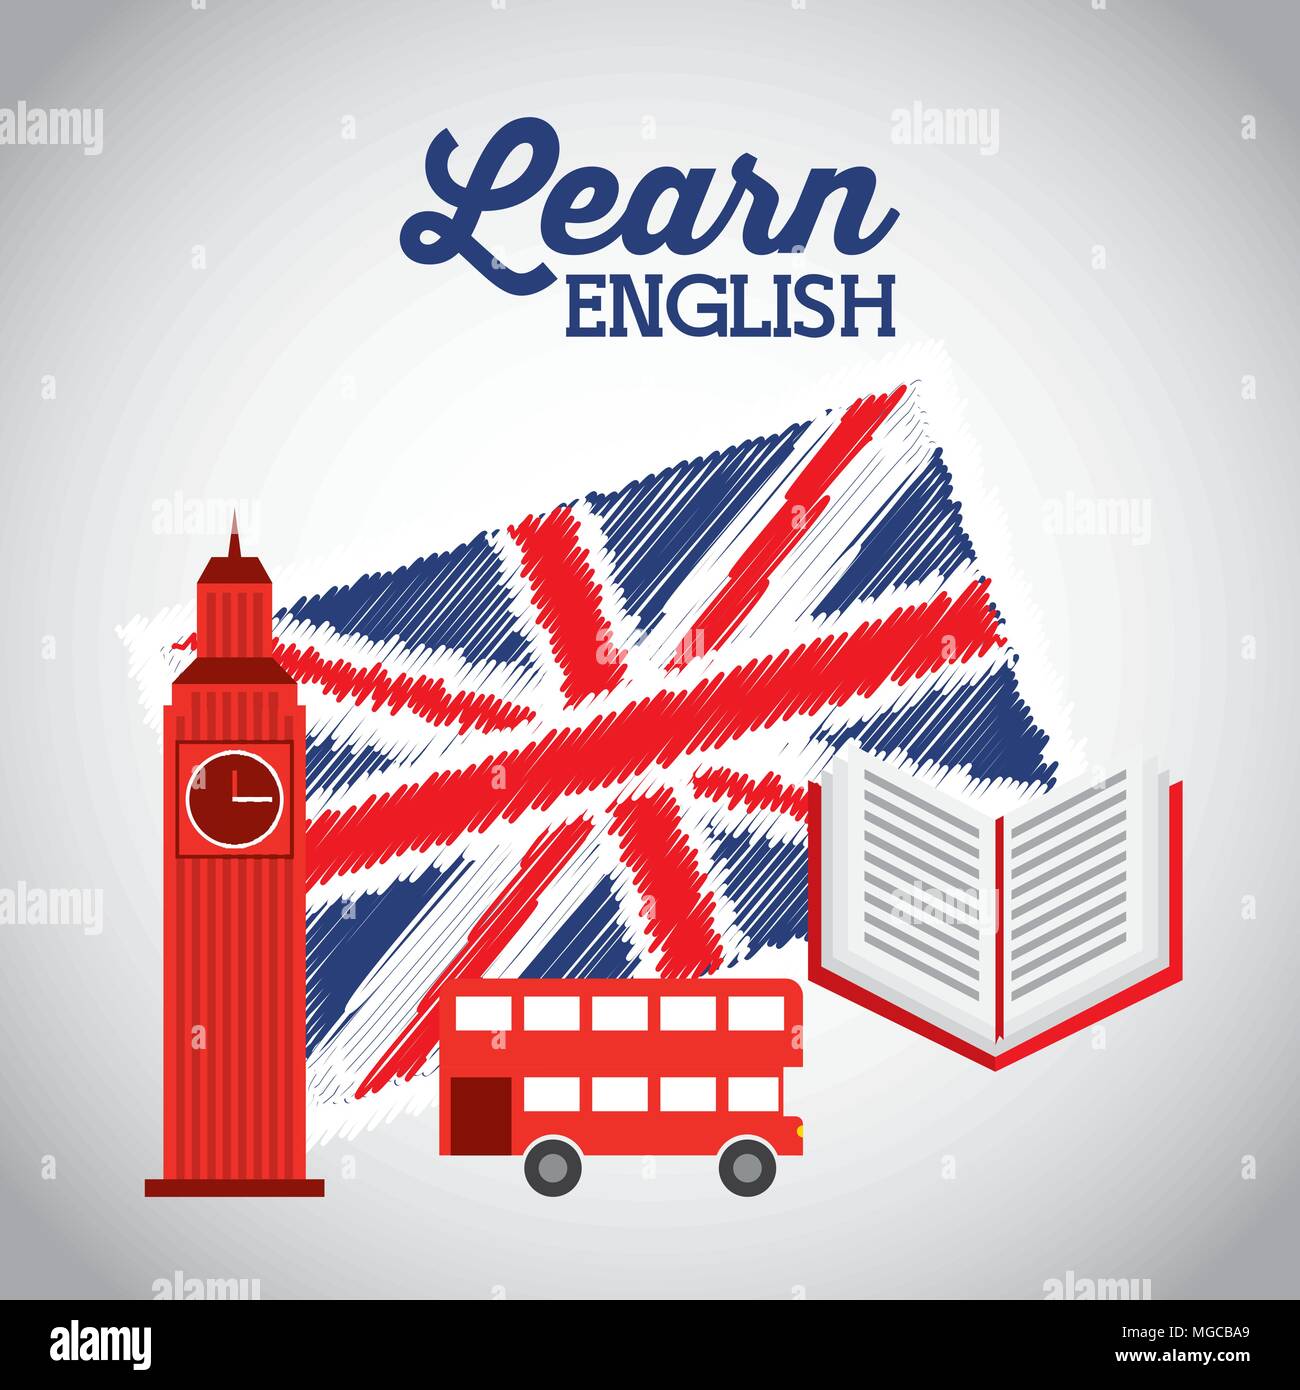 Learn English Design Vector Illustration Eps10 Graphic Stock Vector